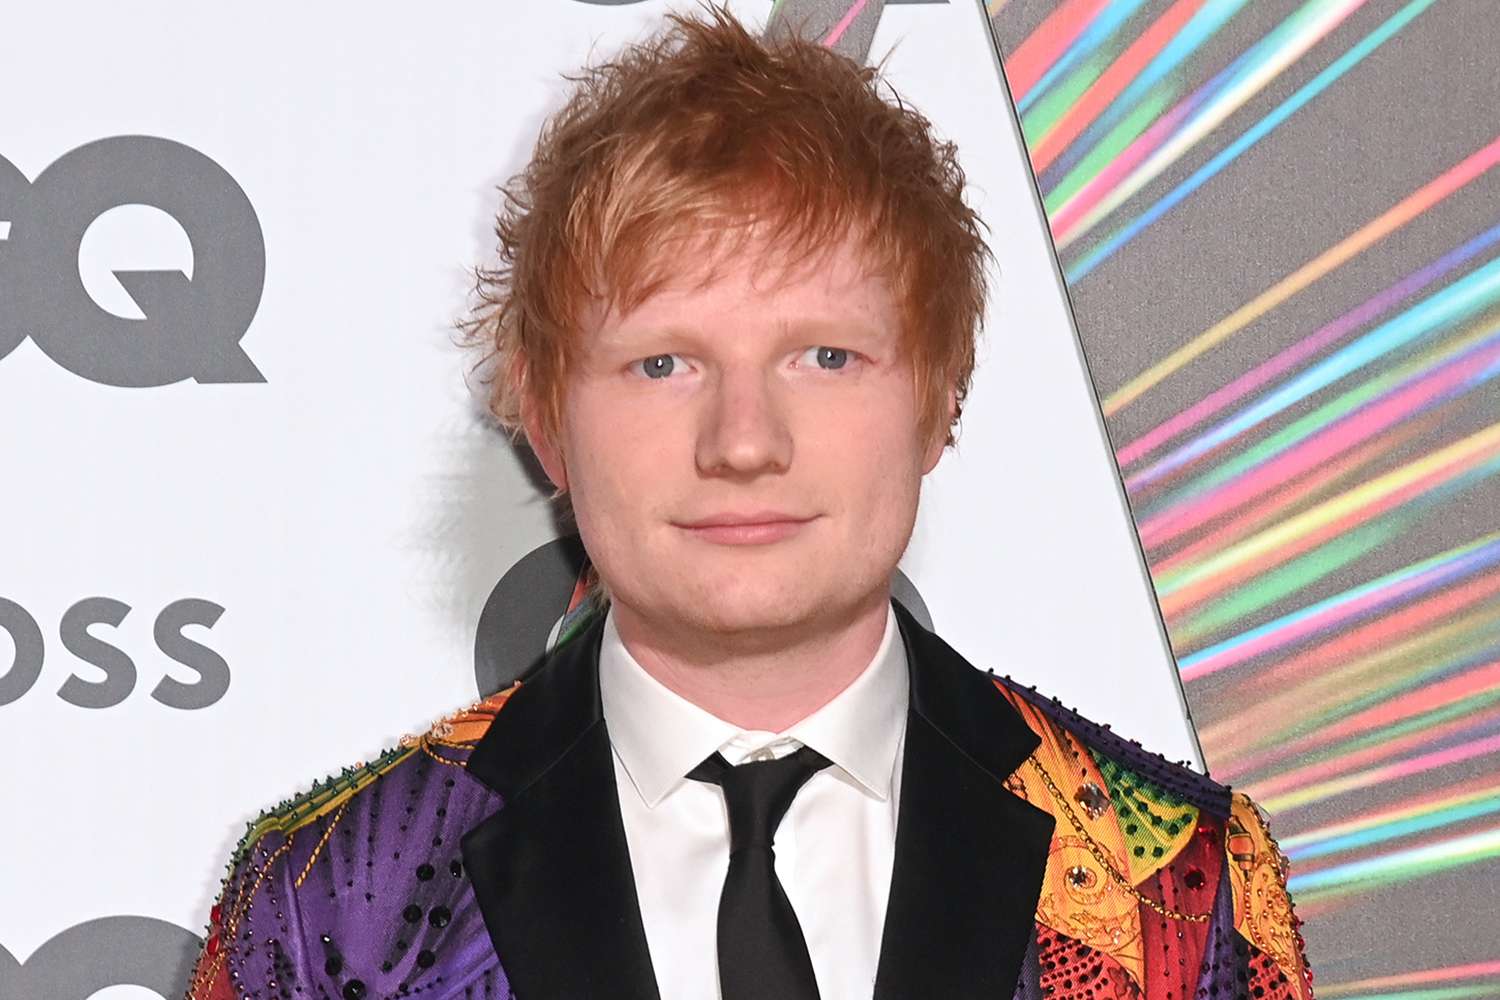 Ed Sheeran: The Singer Net Worth